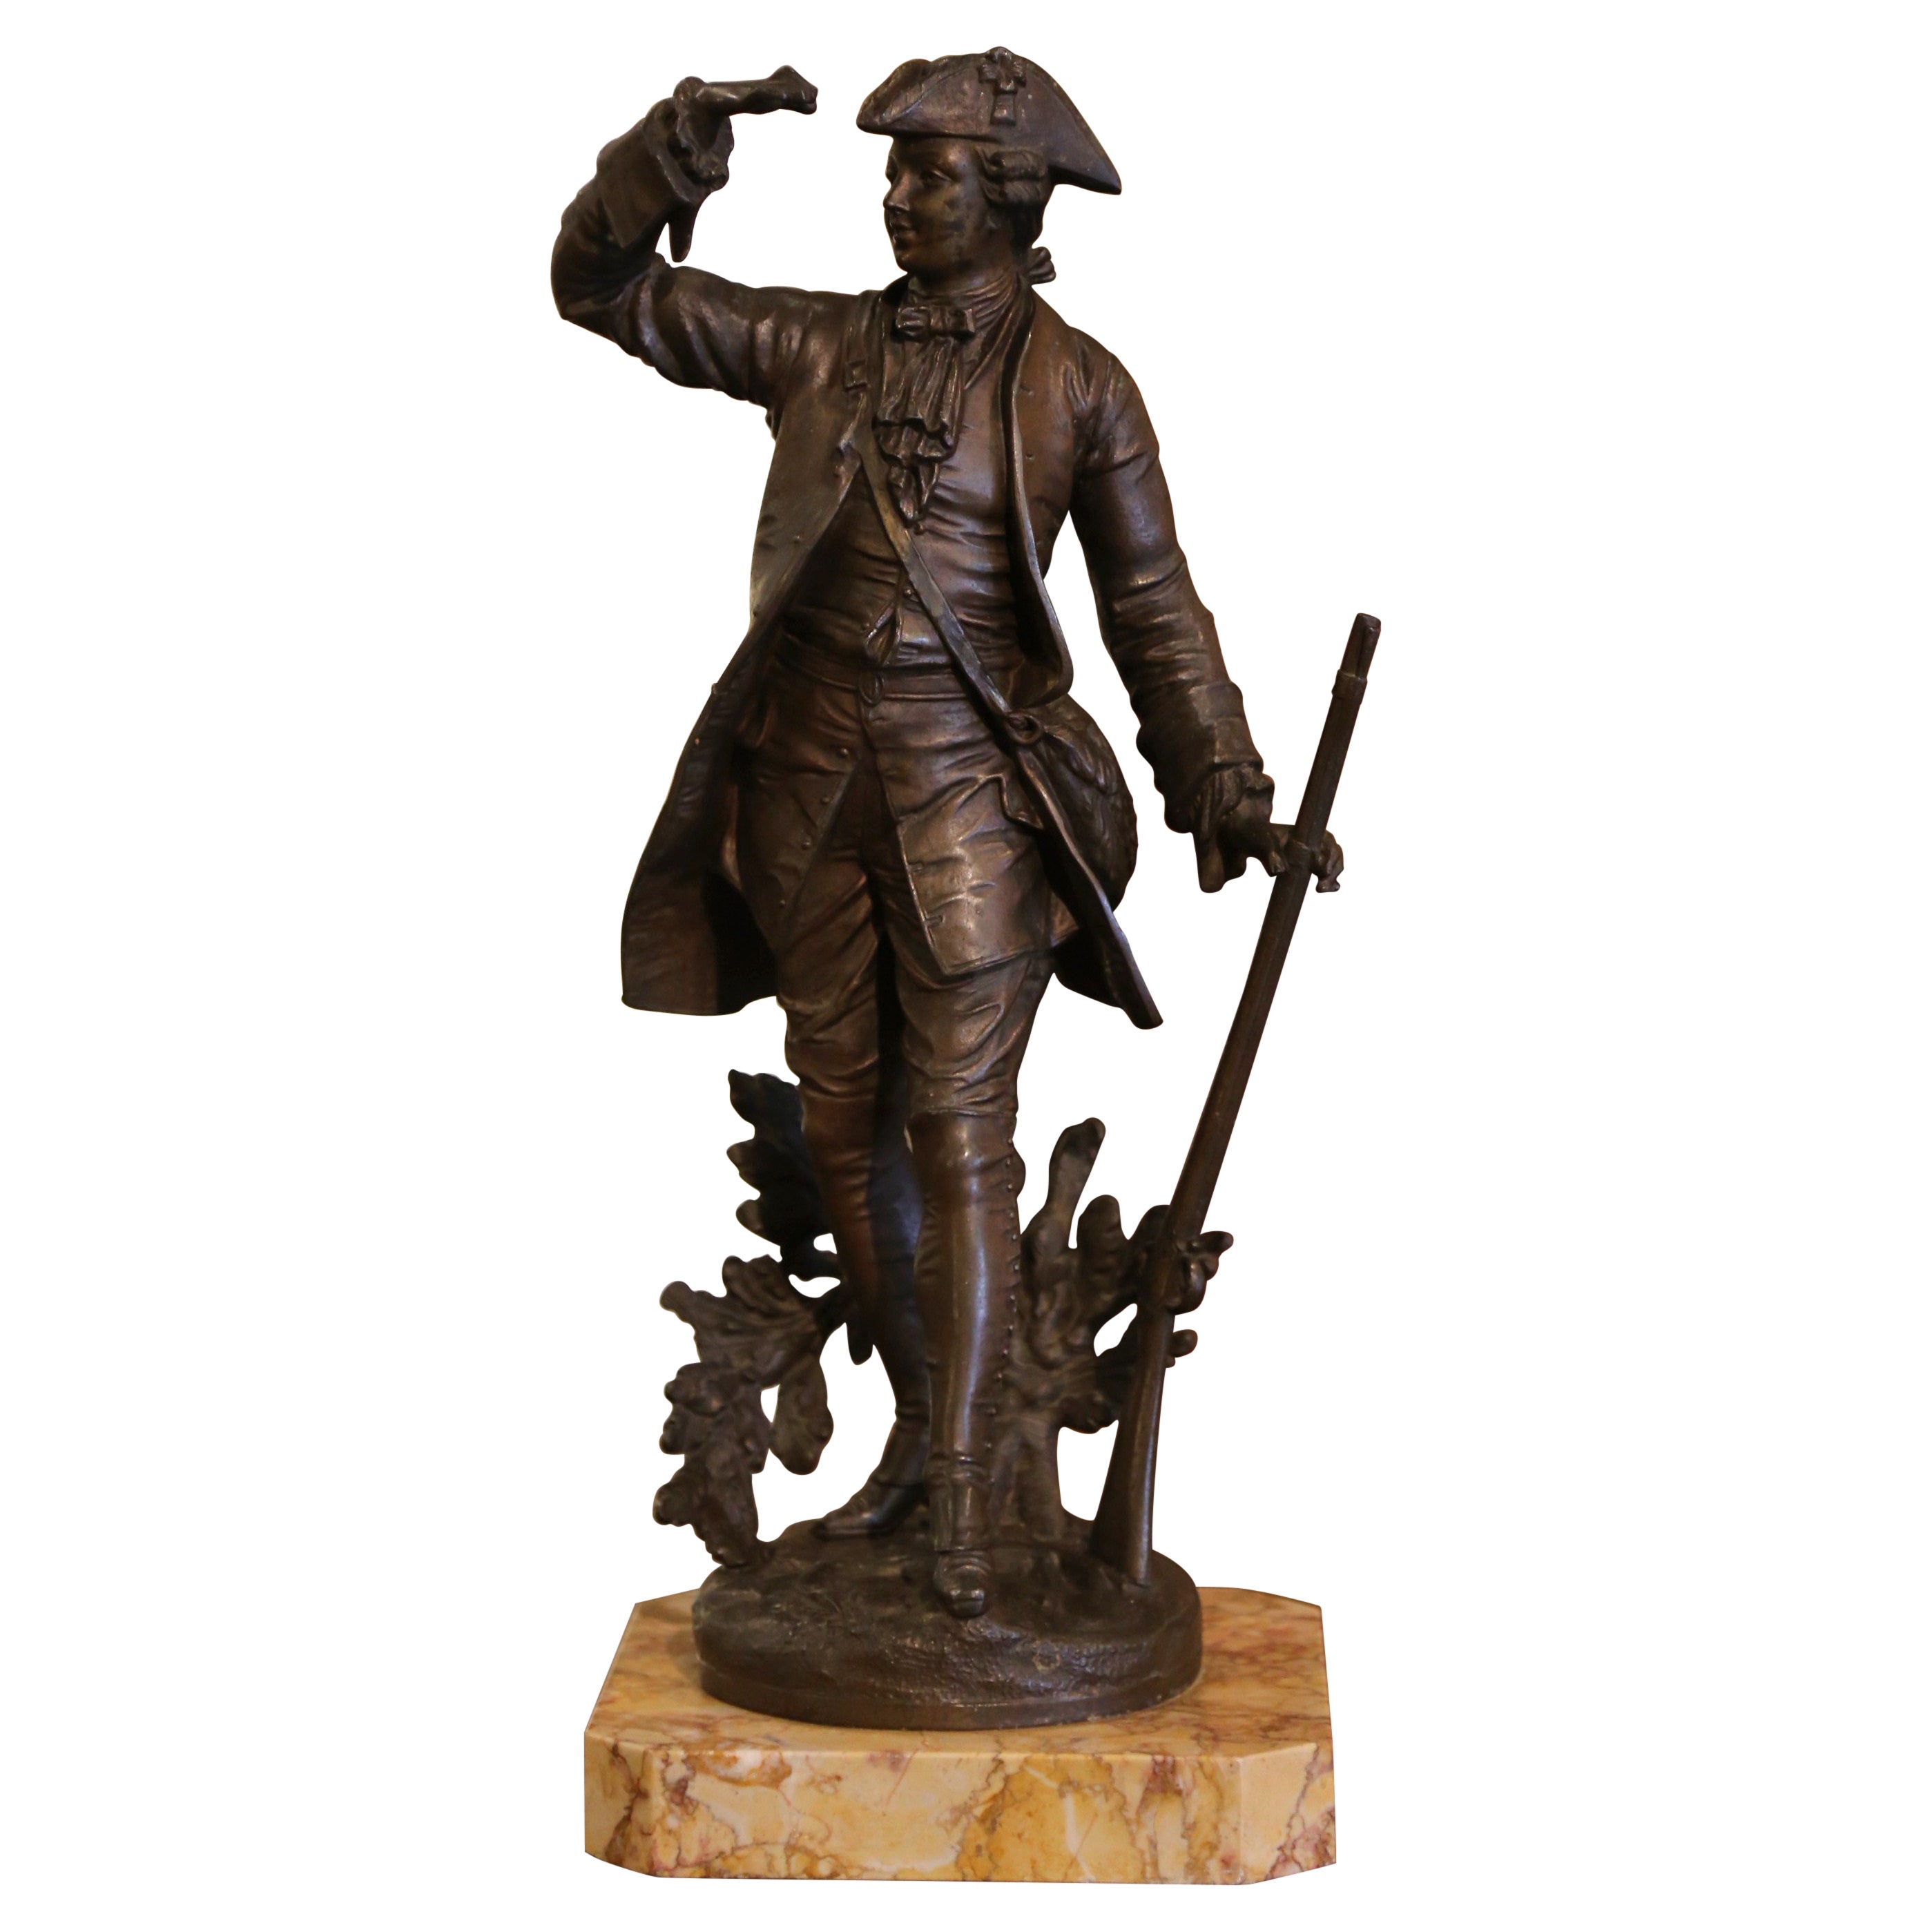 Art Deco Bronze Napoleon Old Guard Soldier Warrior Statuette Sculpture Figurine 